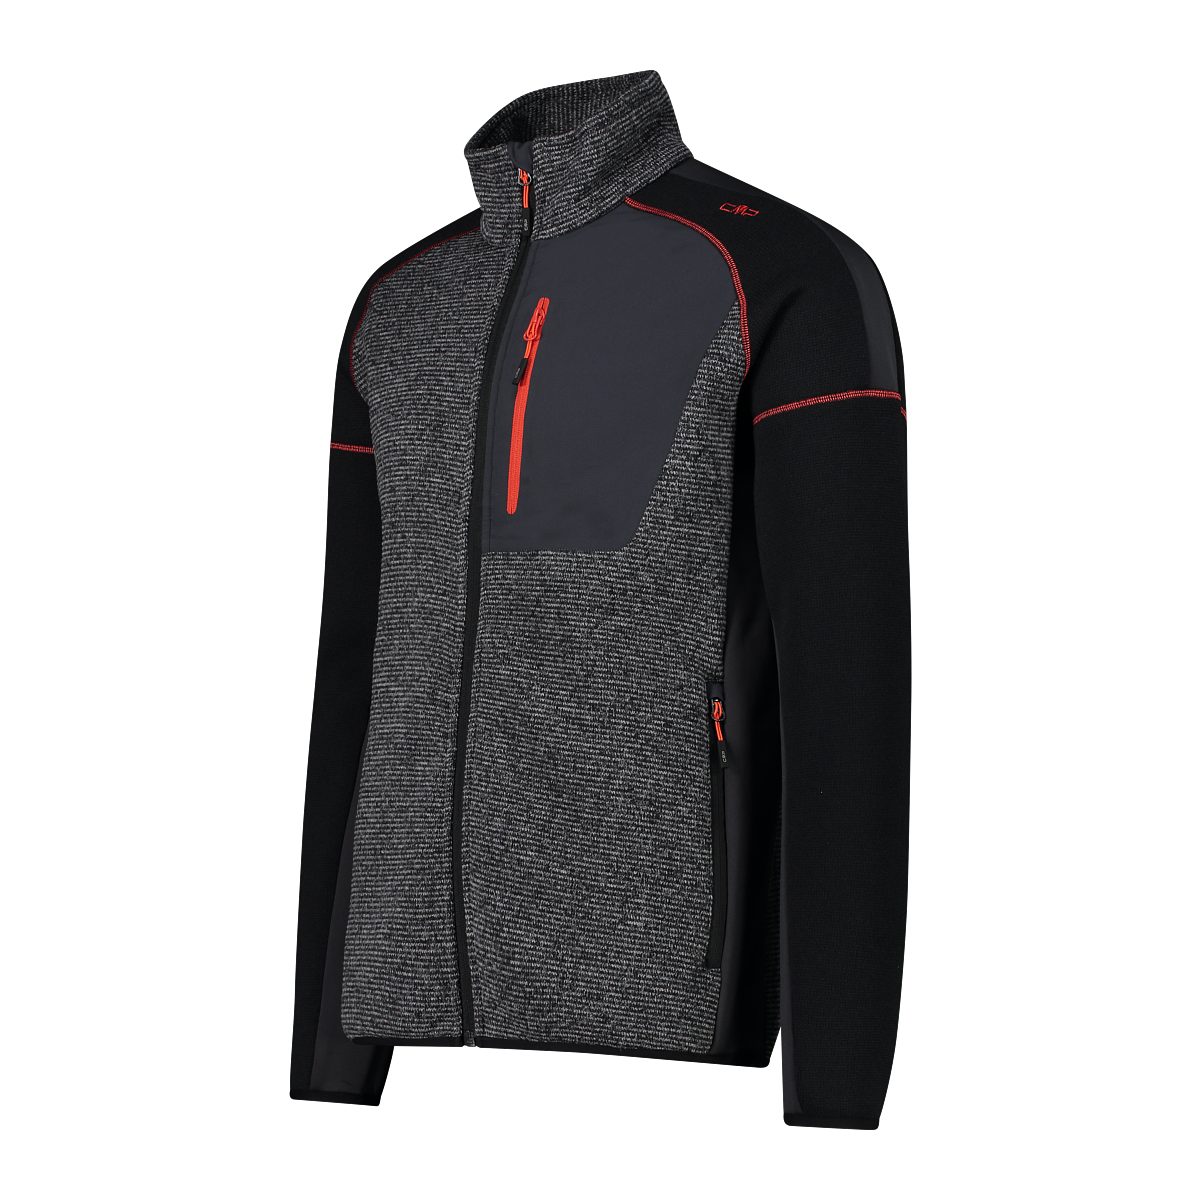 CMP verarbeitetes Sweatjacke Jacket Fleece grey Knit-Tech 49PU Fleece / nero speziell Man